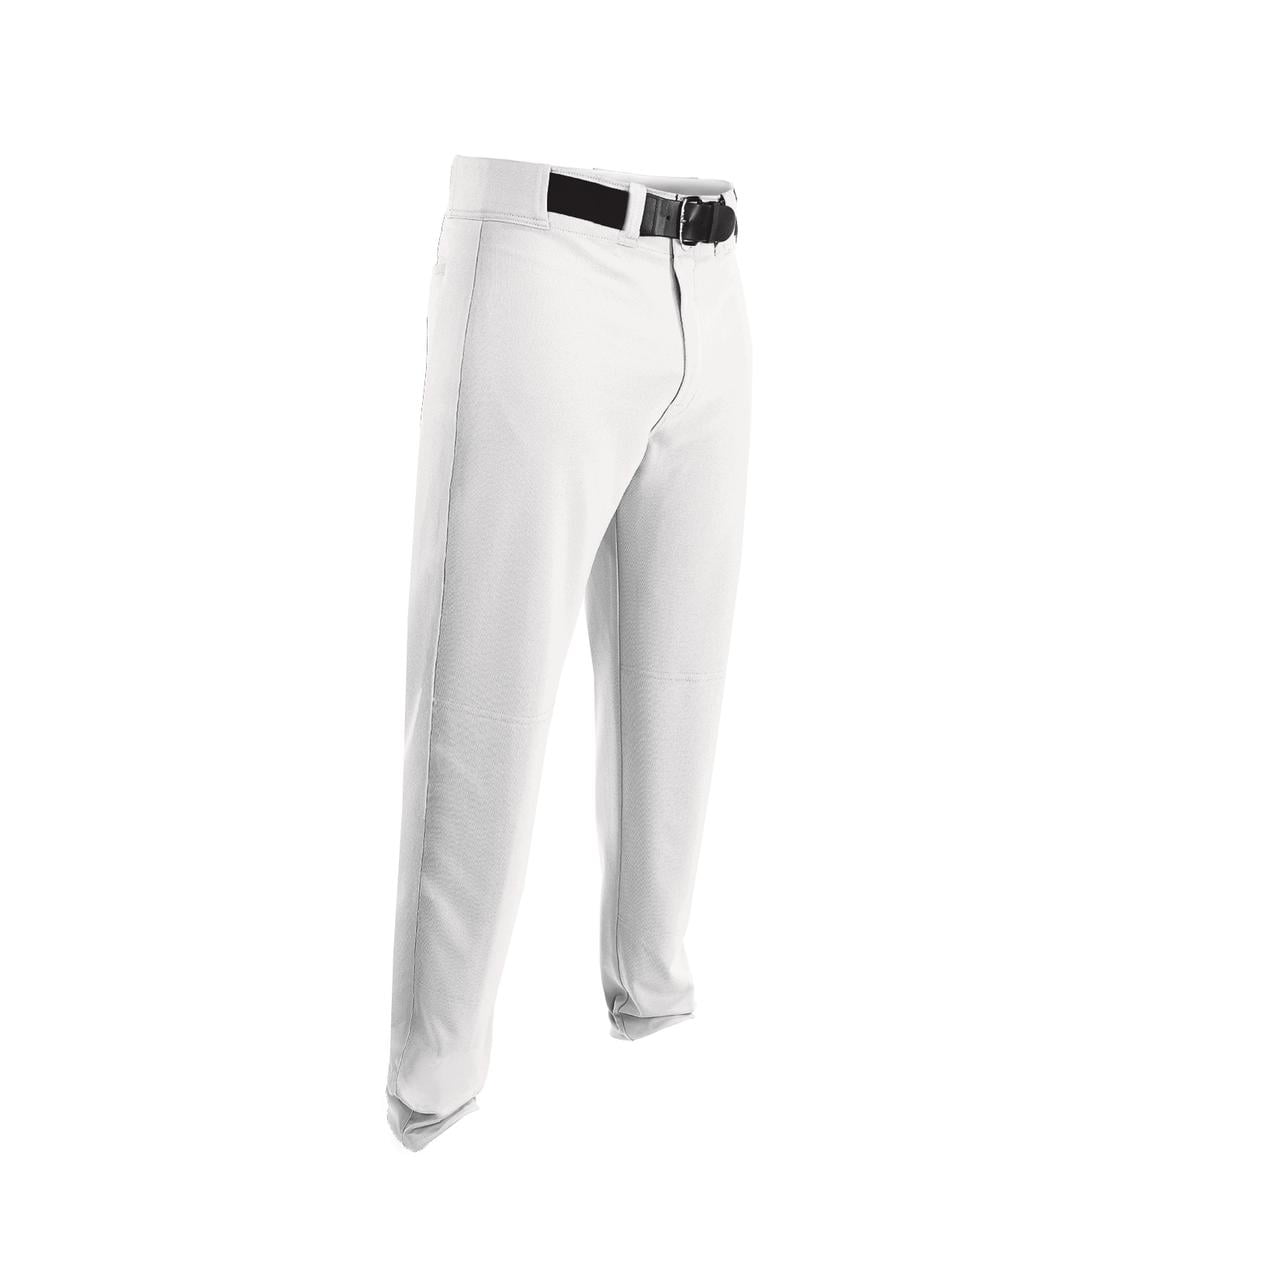 NEW Easton Pro Pull-Up Elastic Cuff Boys White Baseball Pants Size Youth XXS 